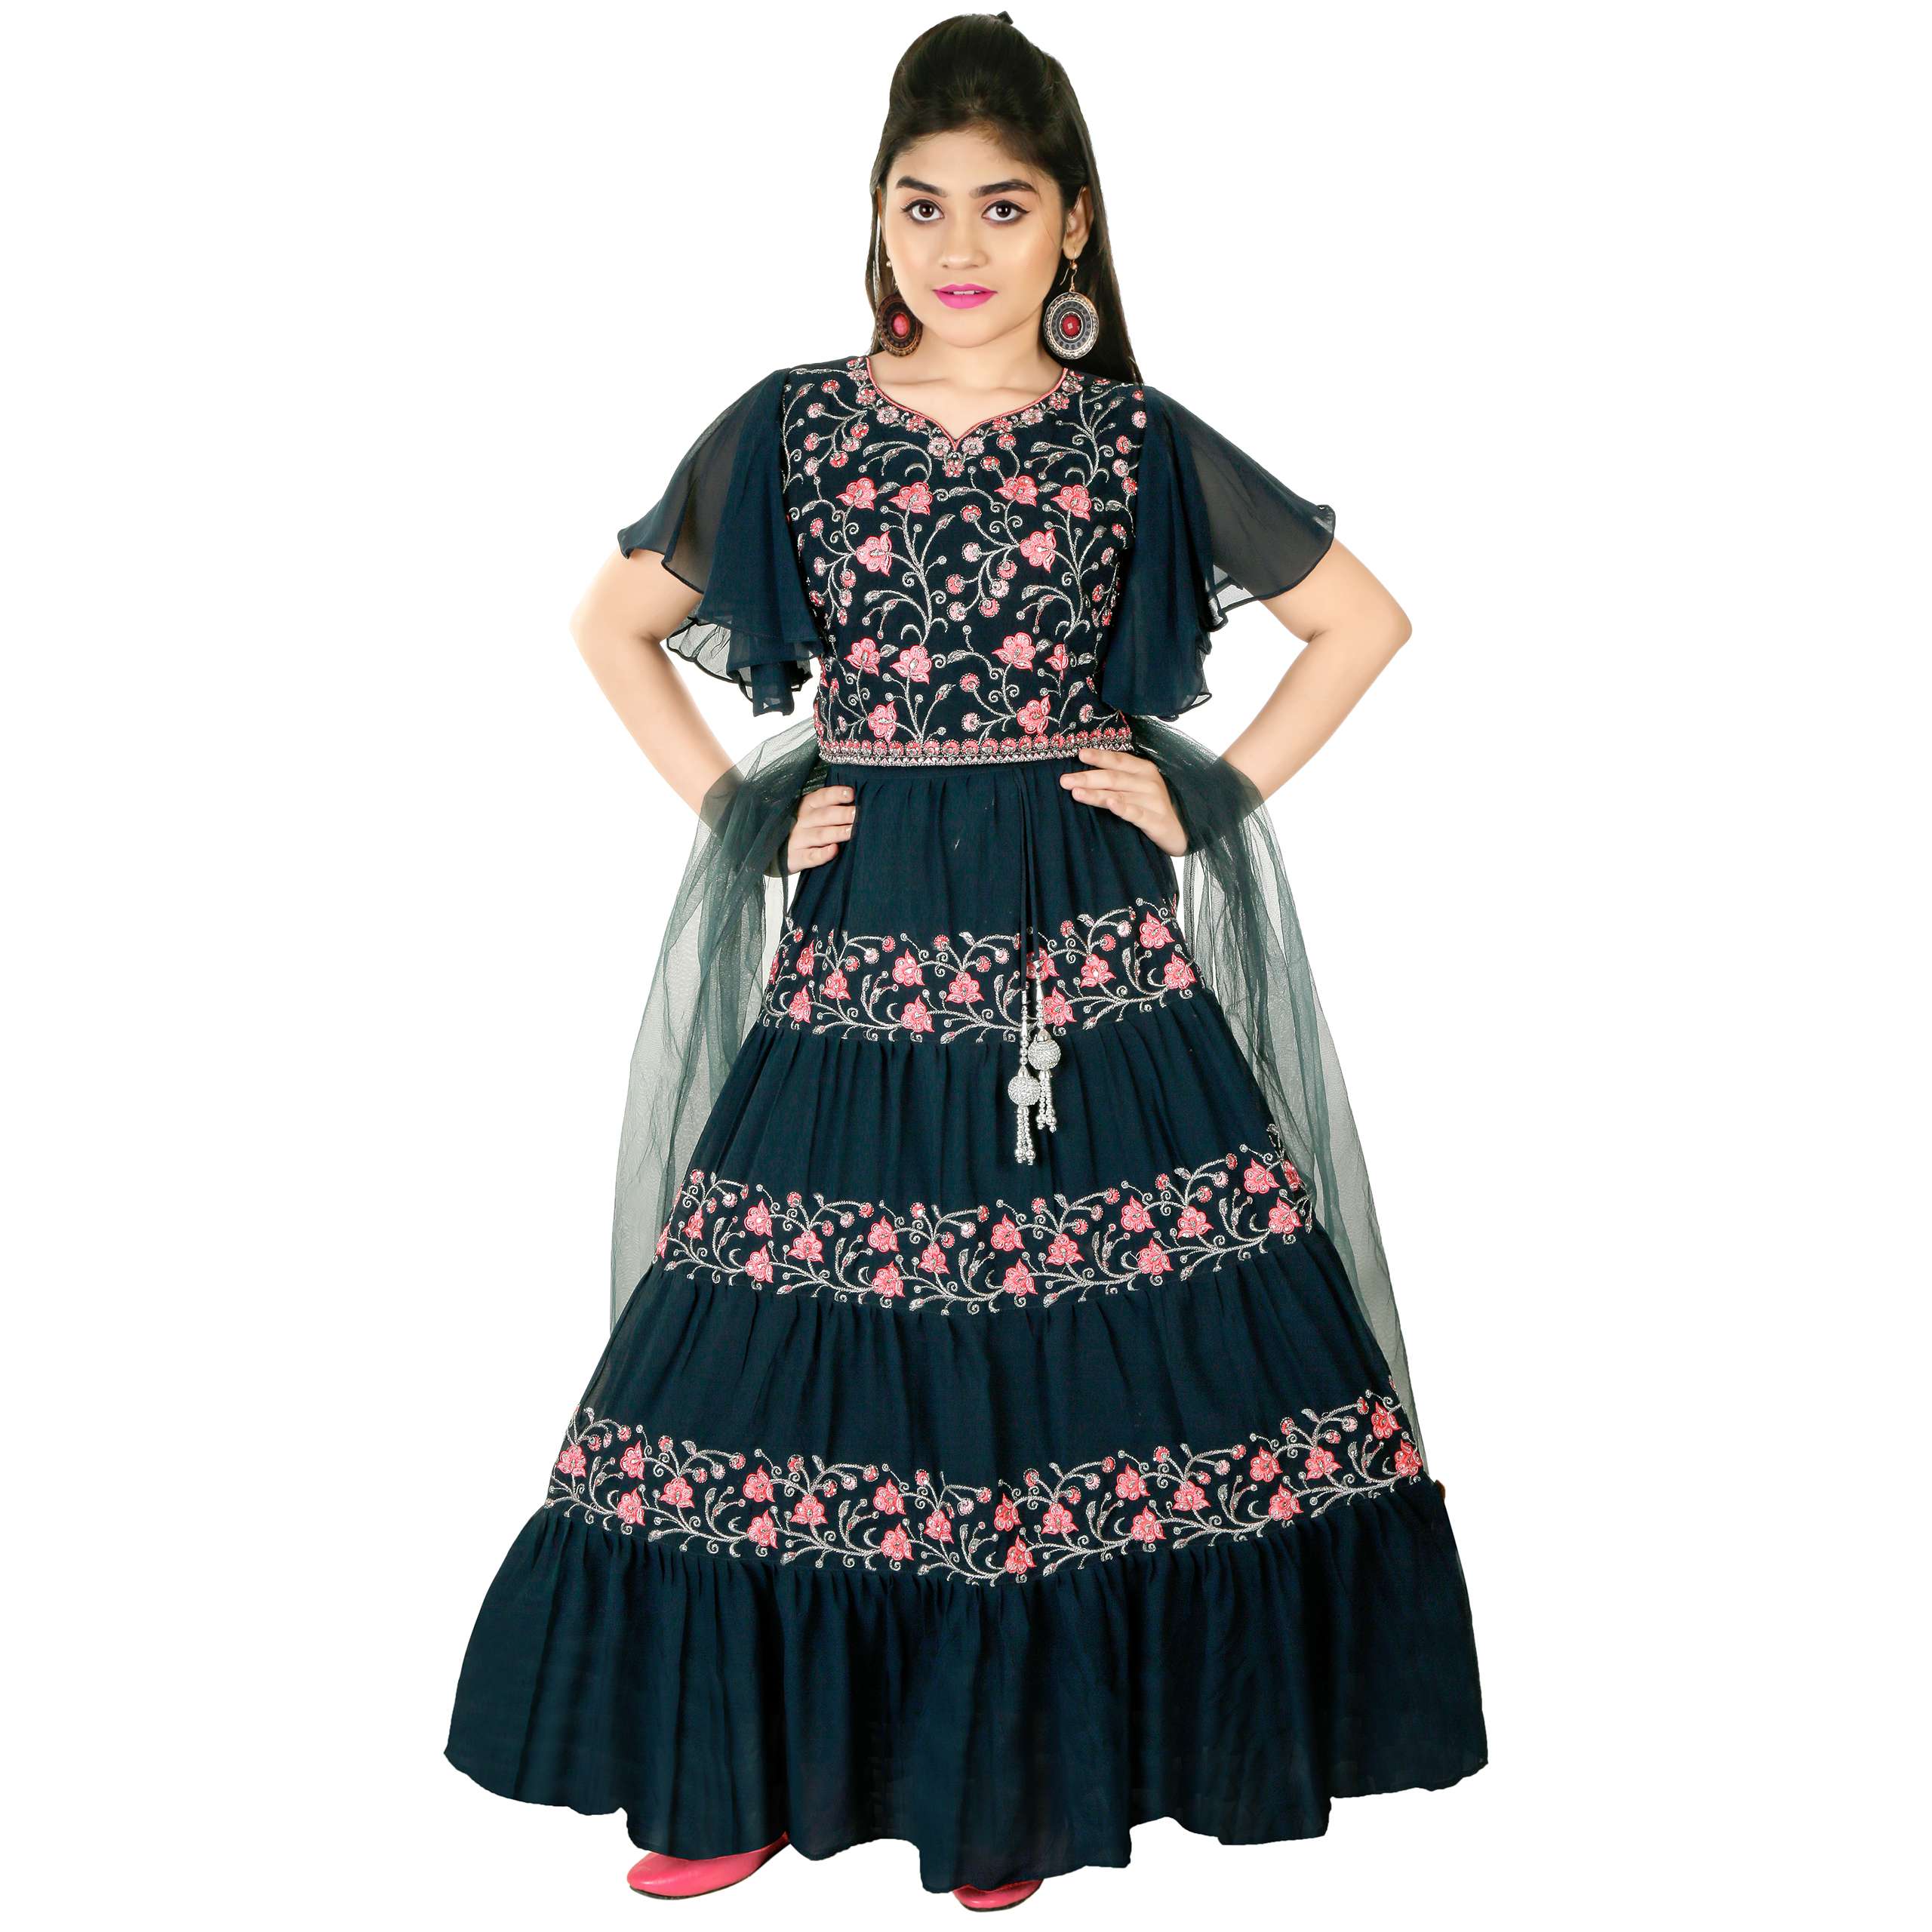 Balaji Emporium Presents Kids Wear Special Designer Indian Party Wear Anarkali Salwar Kameez Suit Girlish Dress Collection At Best Price 3021